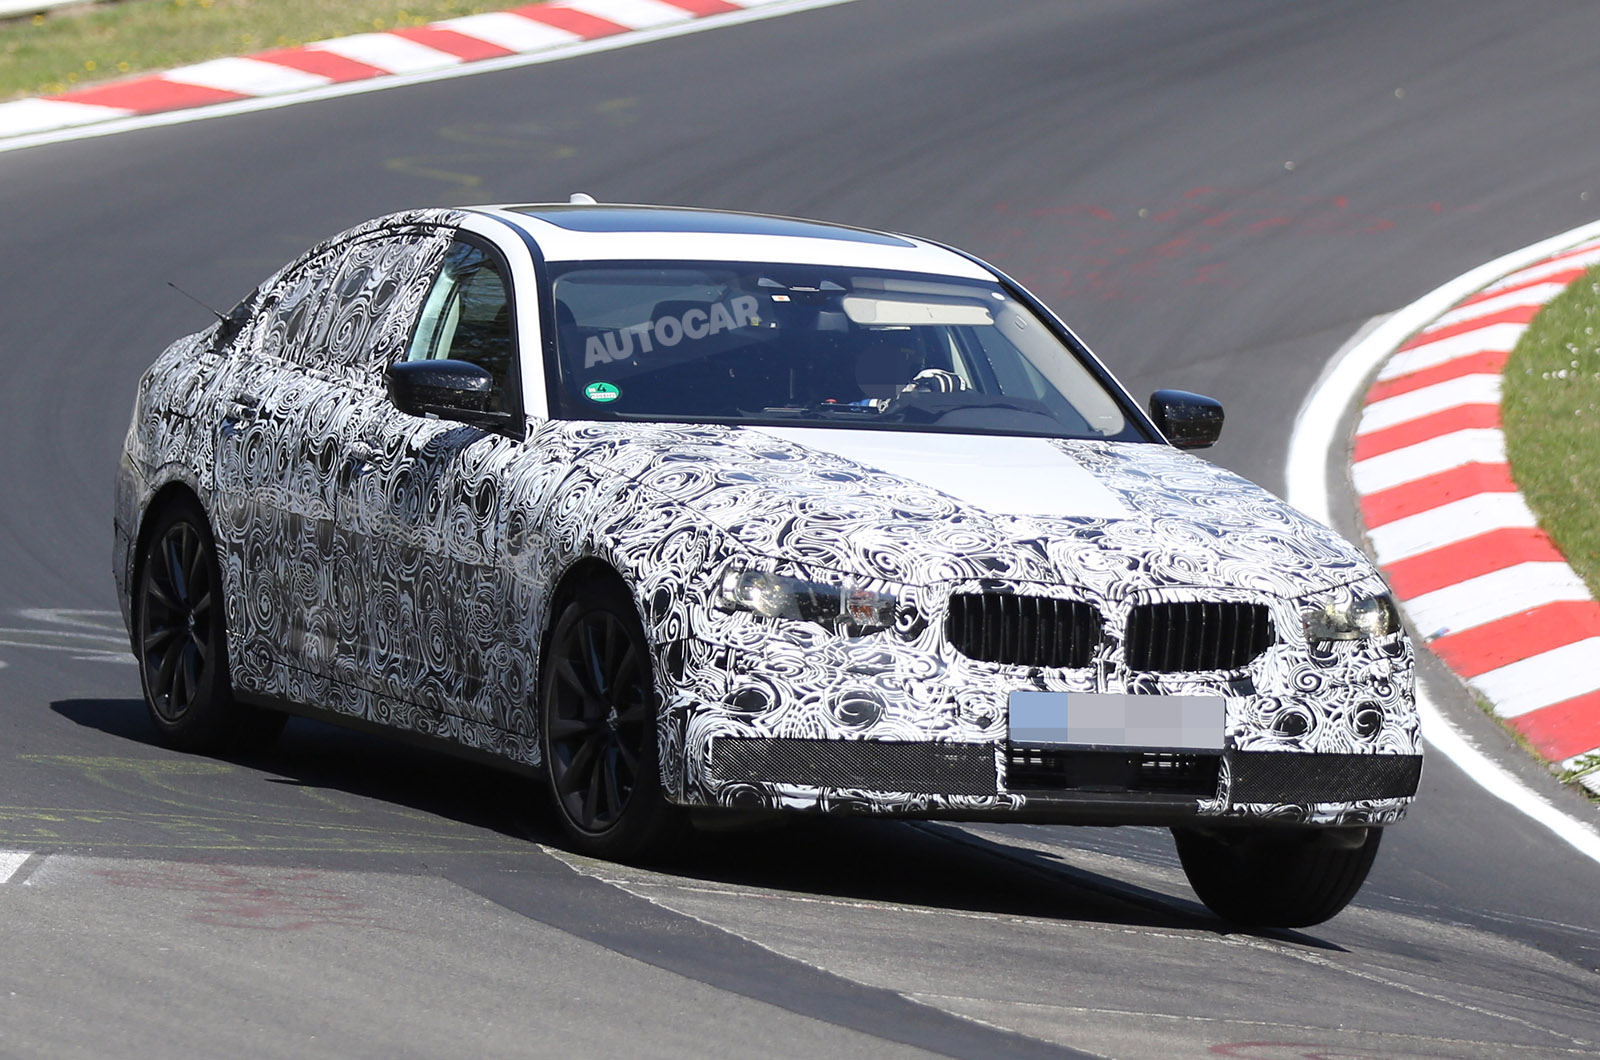 2017 BMW 5 Series Touring (G31) Revealed Ahead Of Geneva Debut